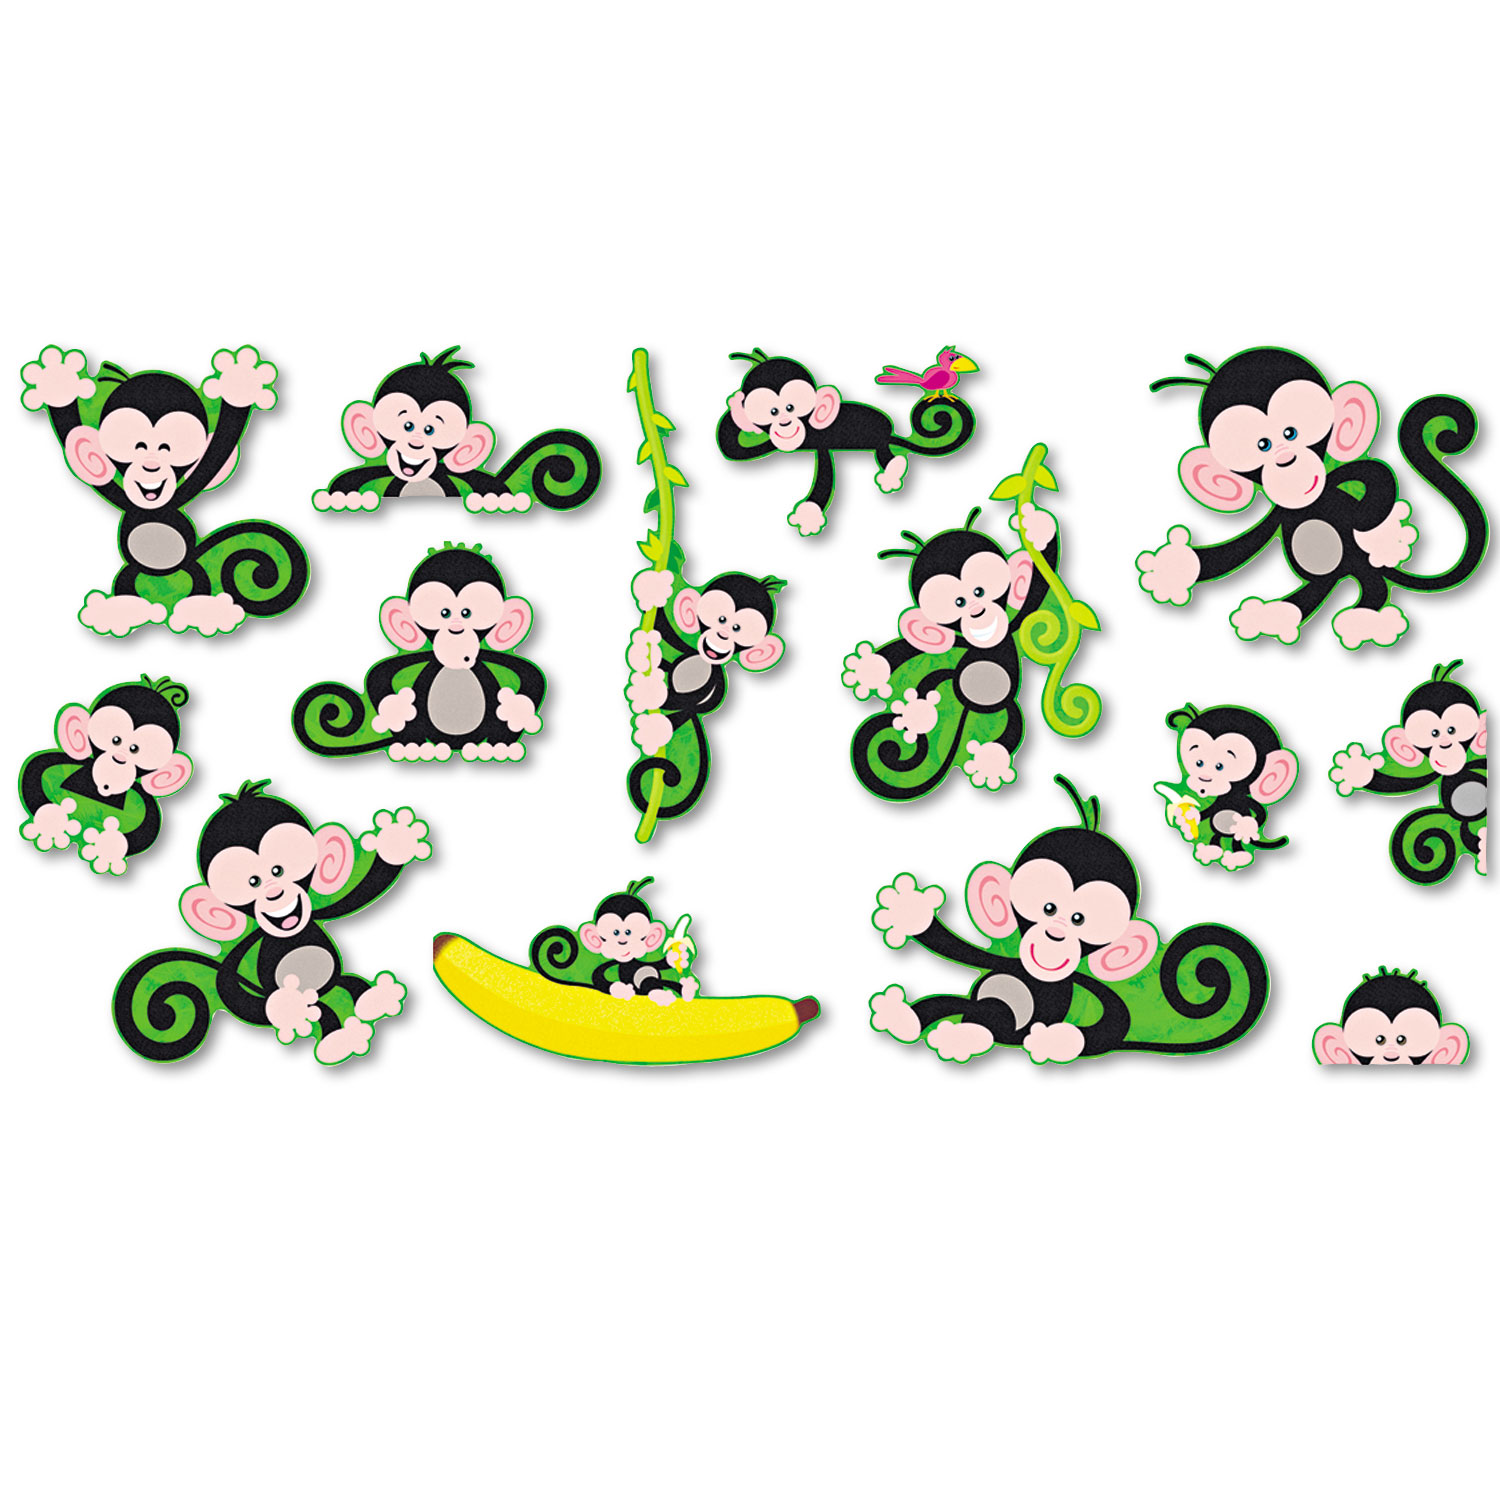 Monkey Mischief Bananas Bulletin Board Set, 30 Pieces